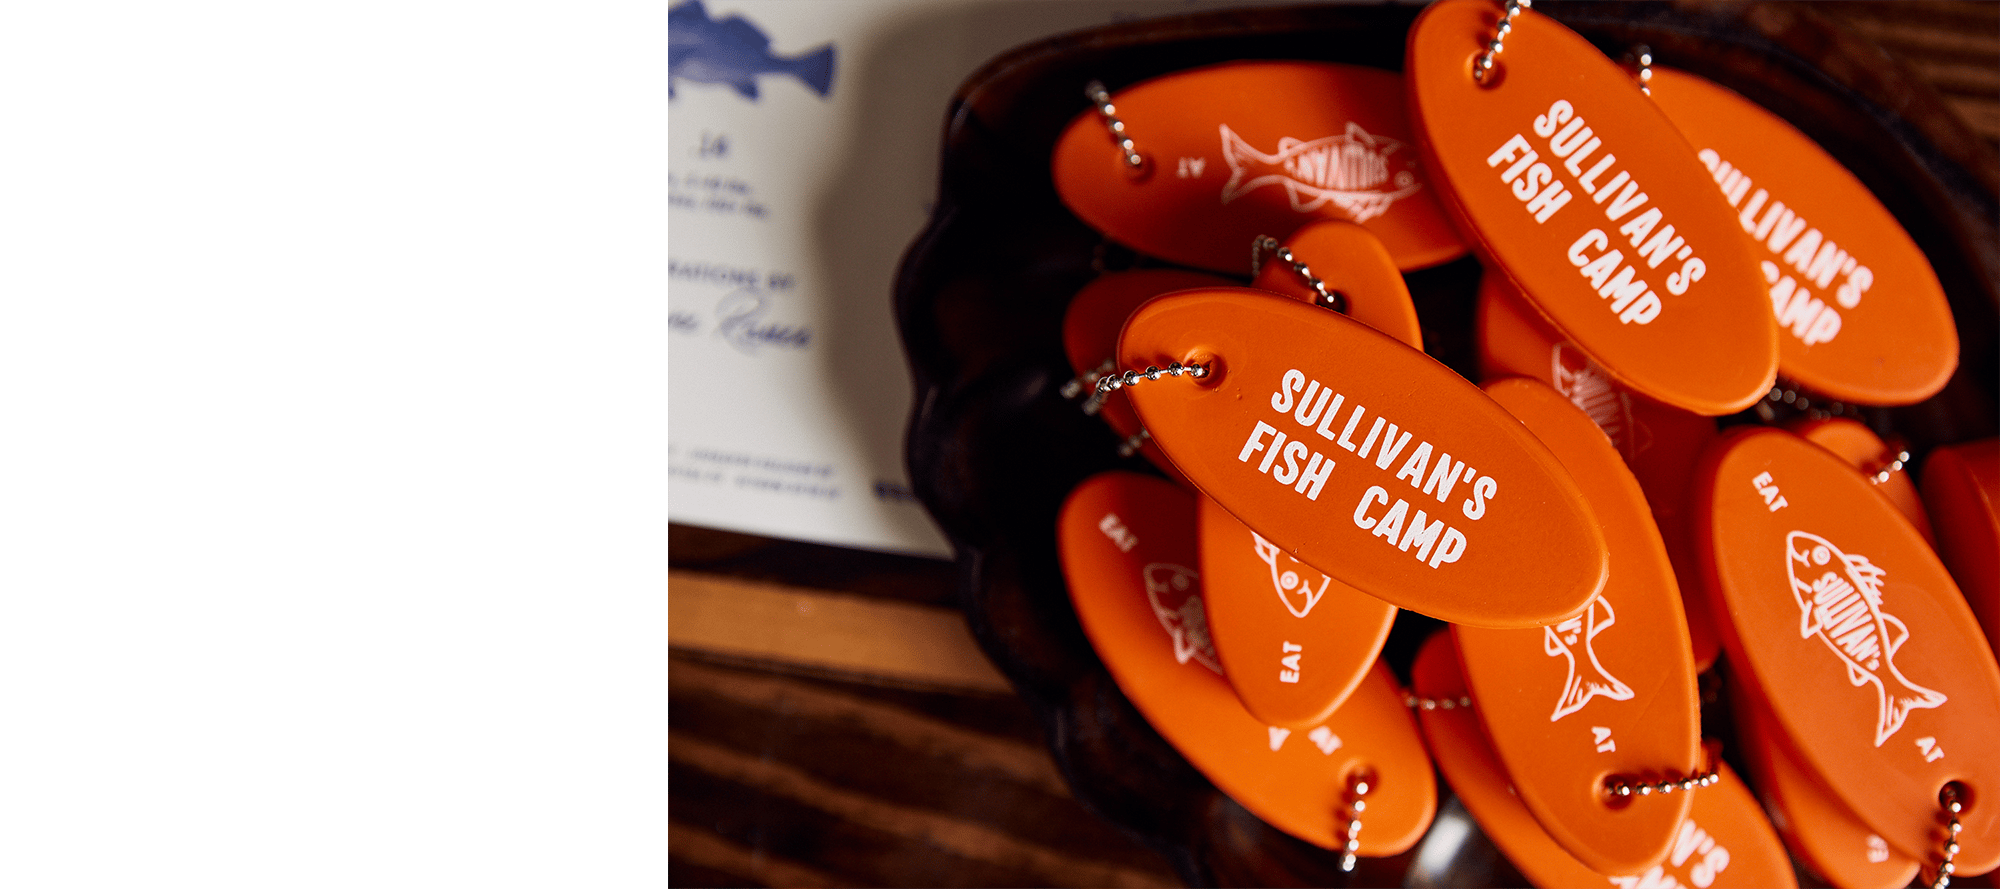 Sullivan’s Fish Camp | SDCO Partners